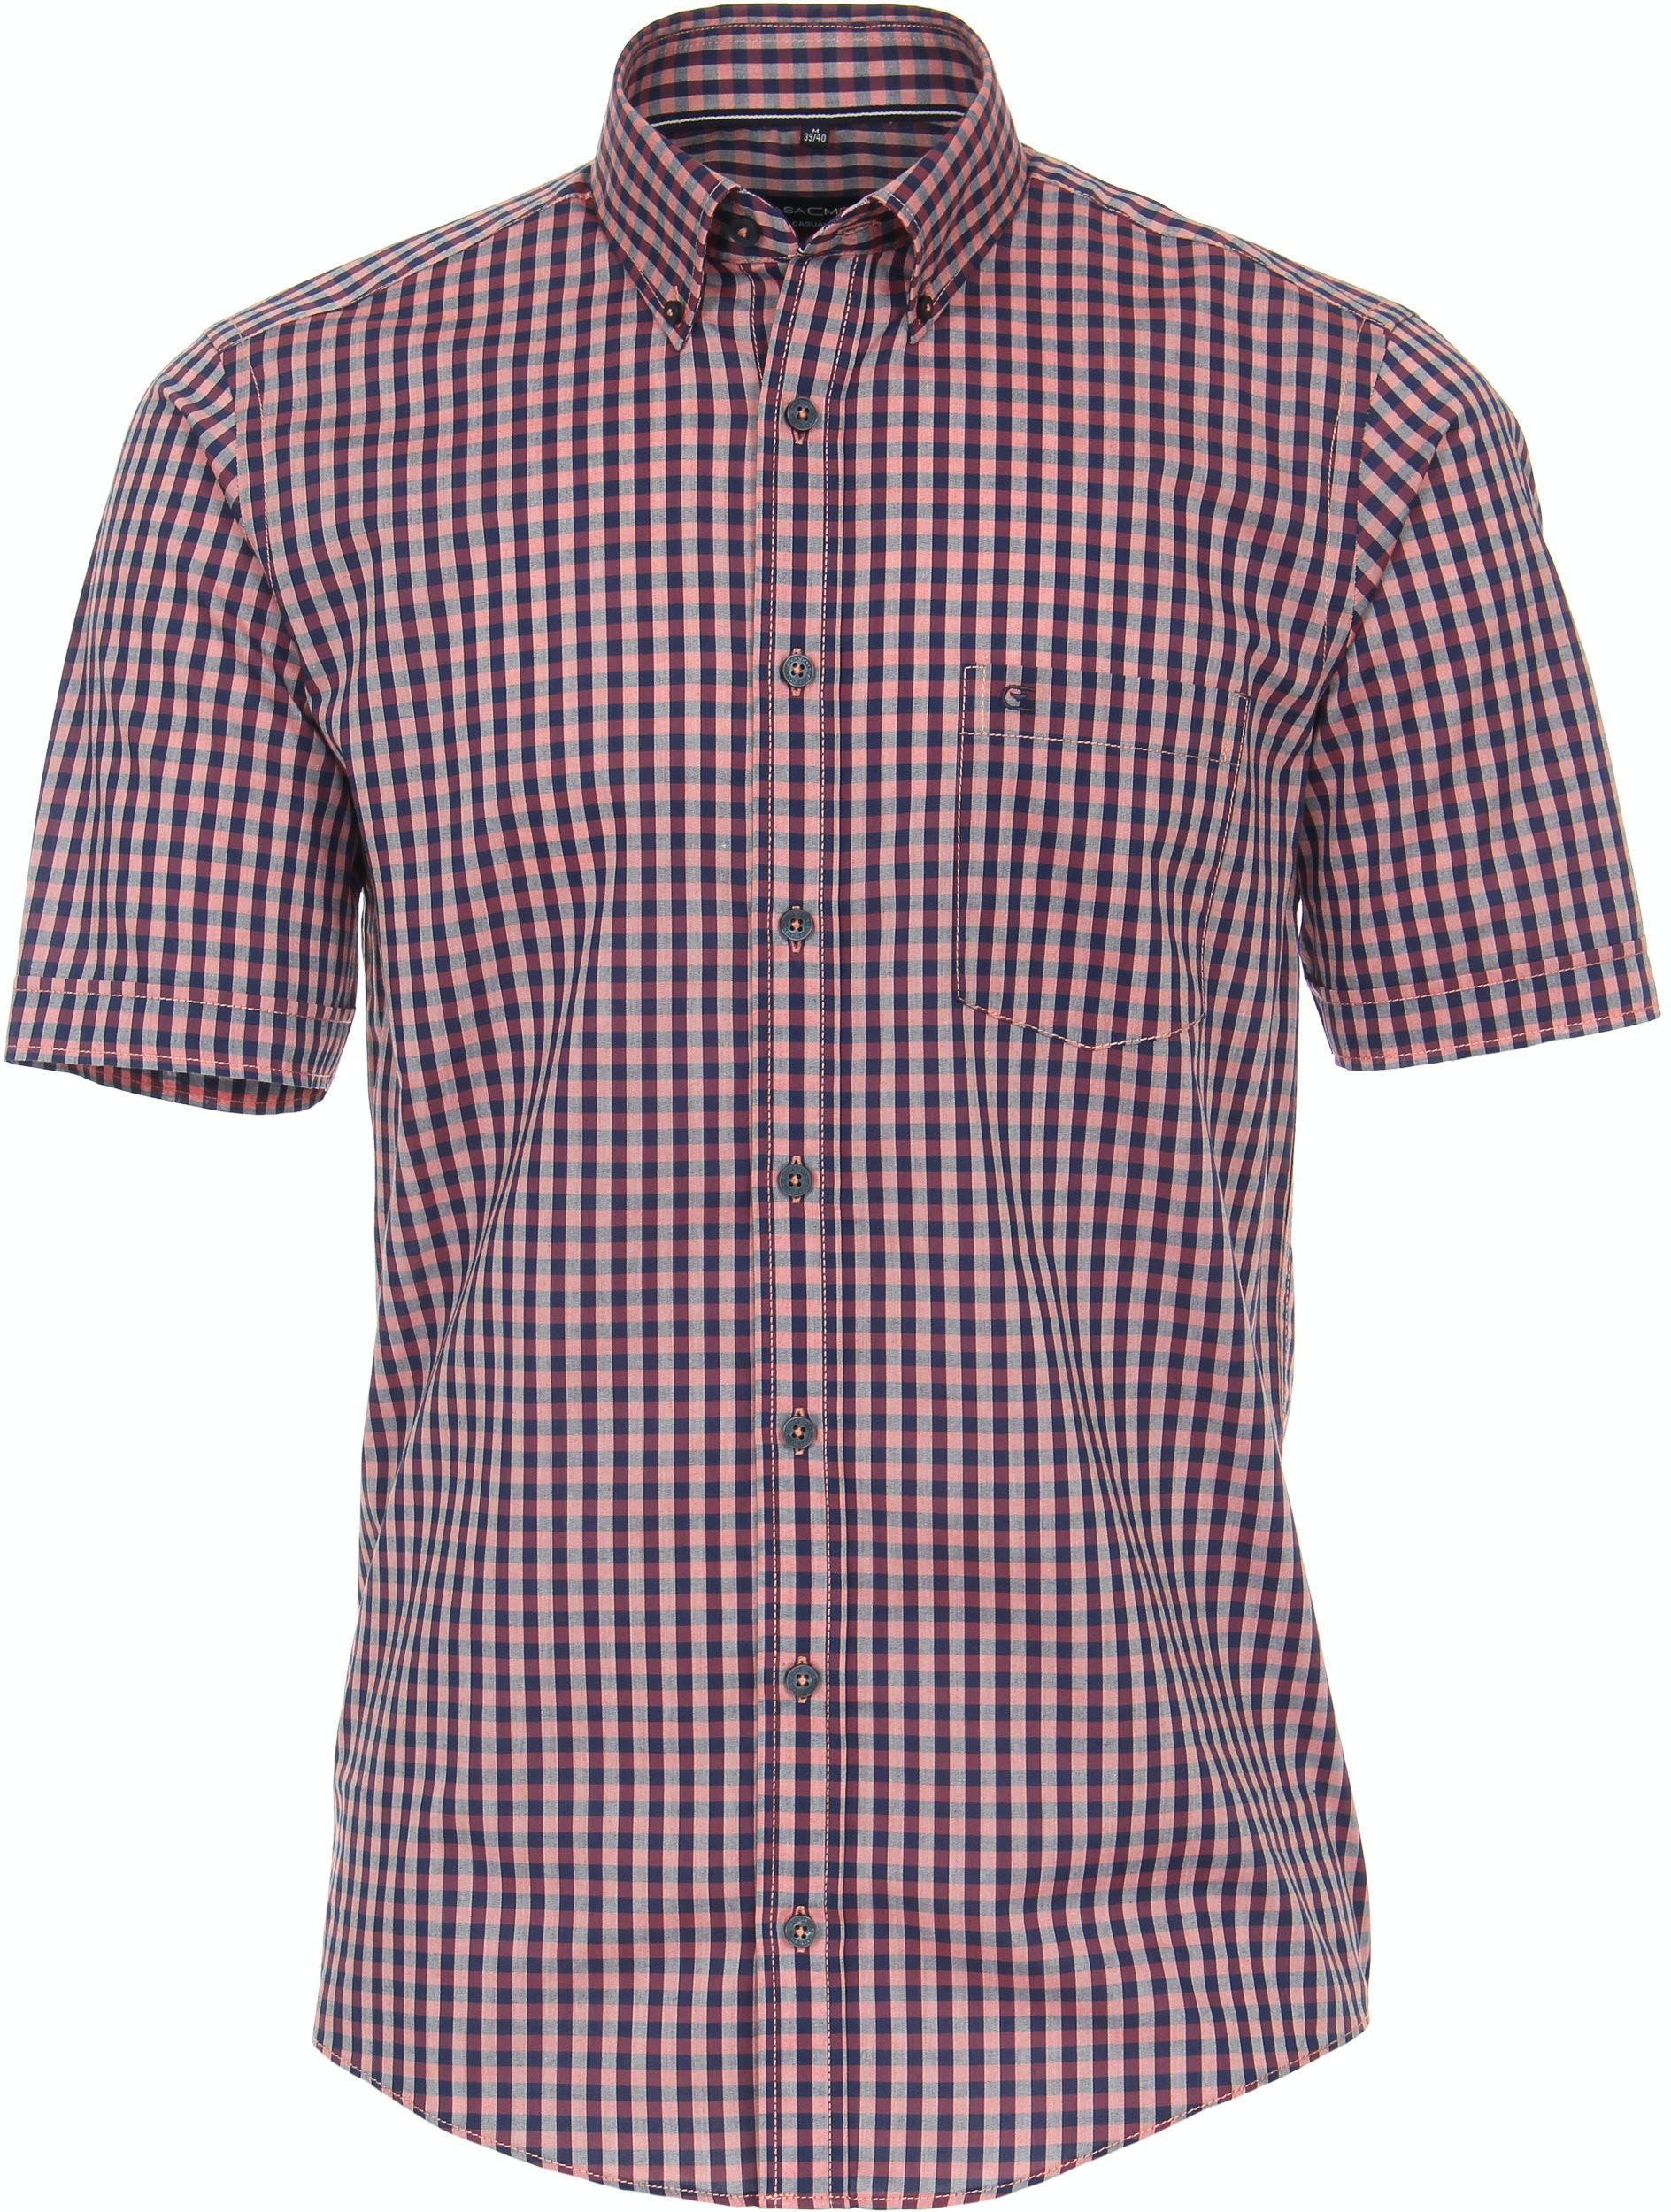 Casa Moda SS Shirt Checkered Red size L